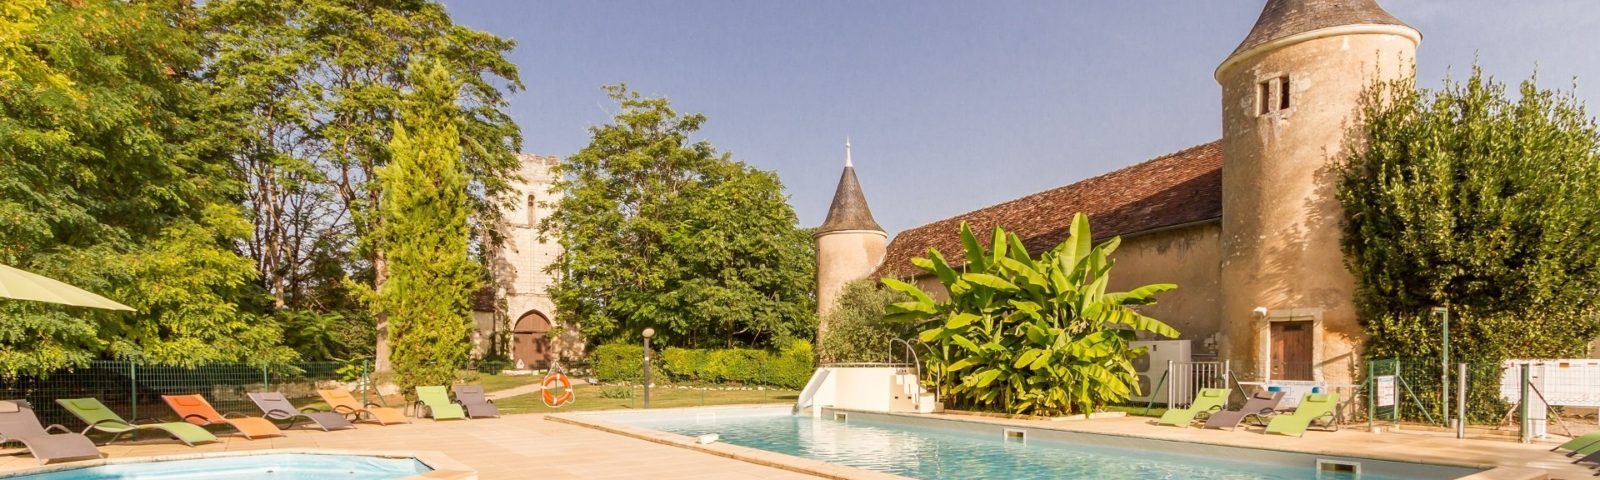 Camping avec une piscine chauffée - Chatellerault, Vienne (86)